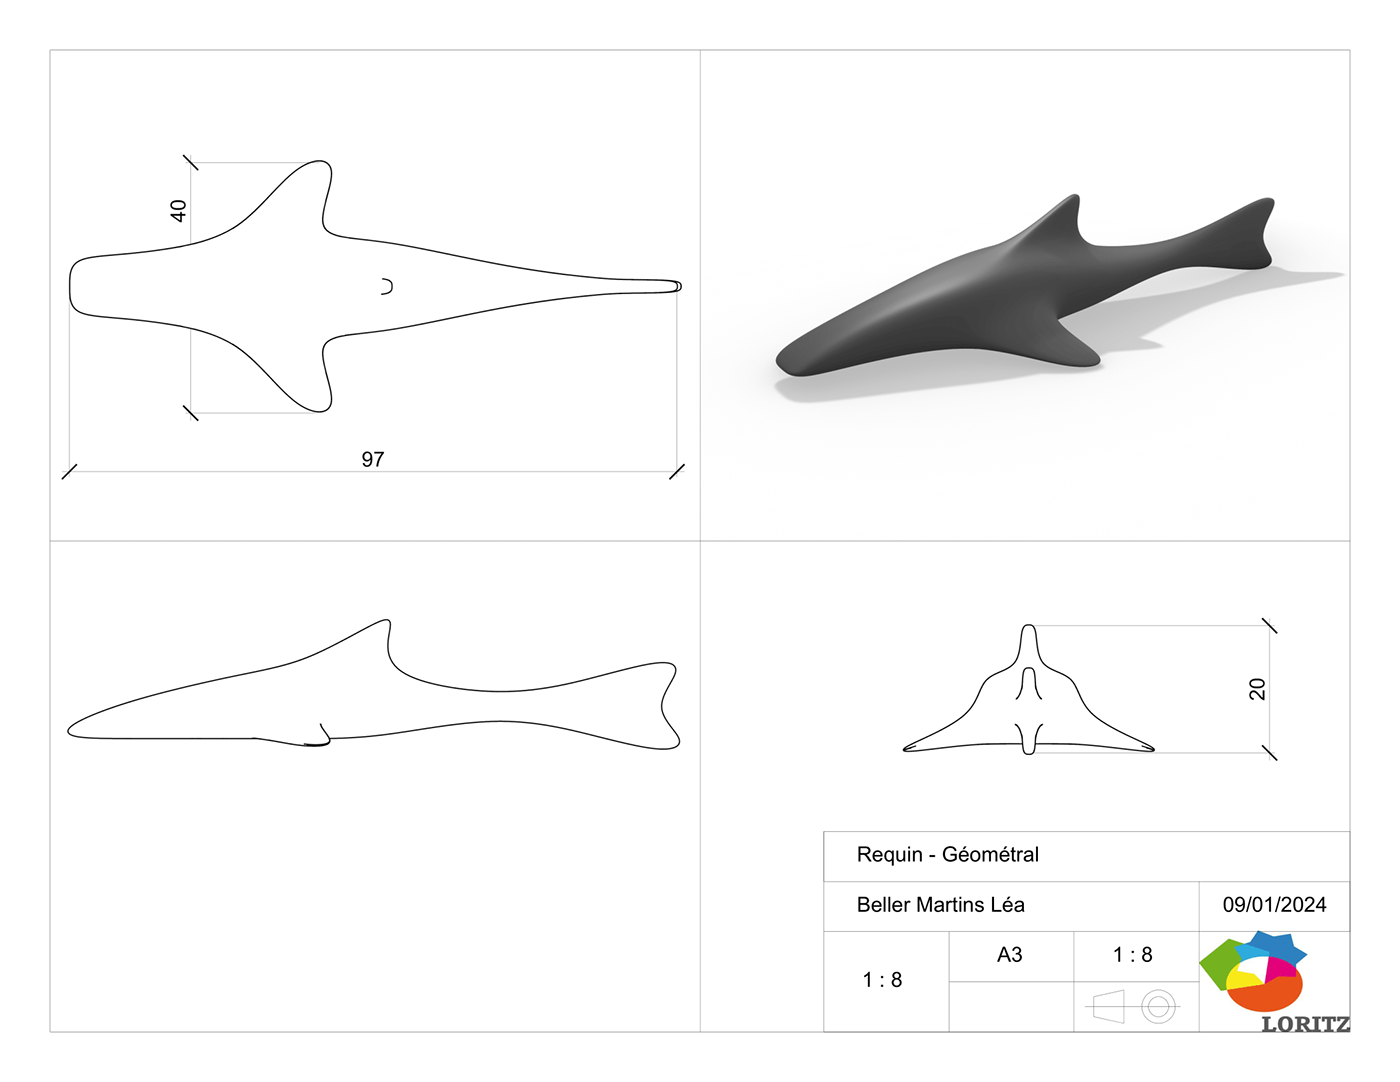 3d modeling Rhino 3D modeling texturing